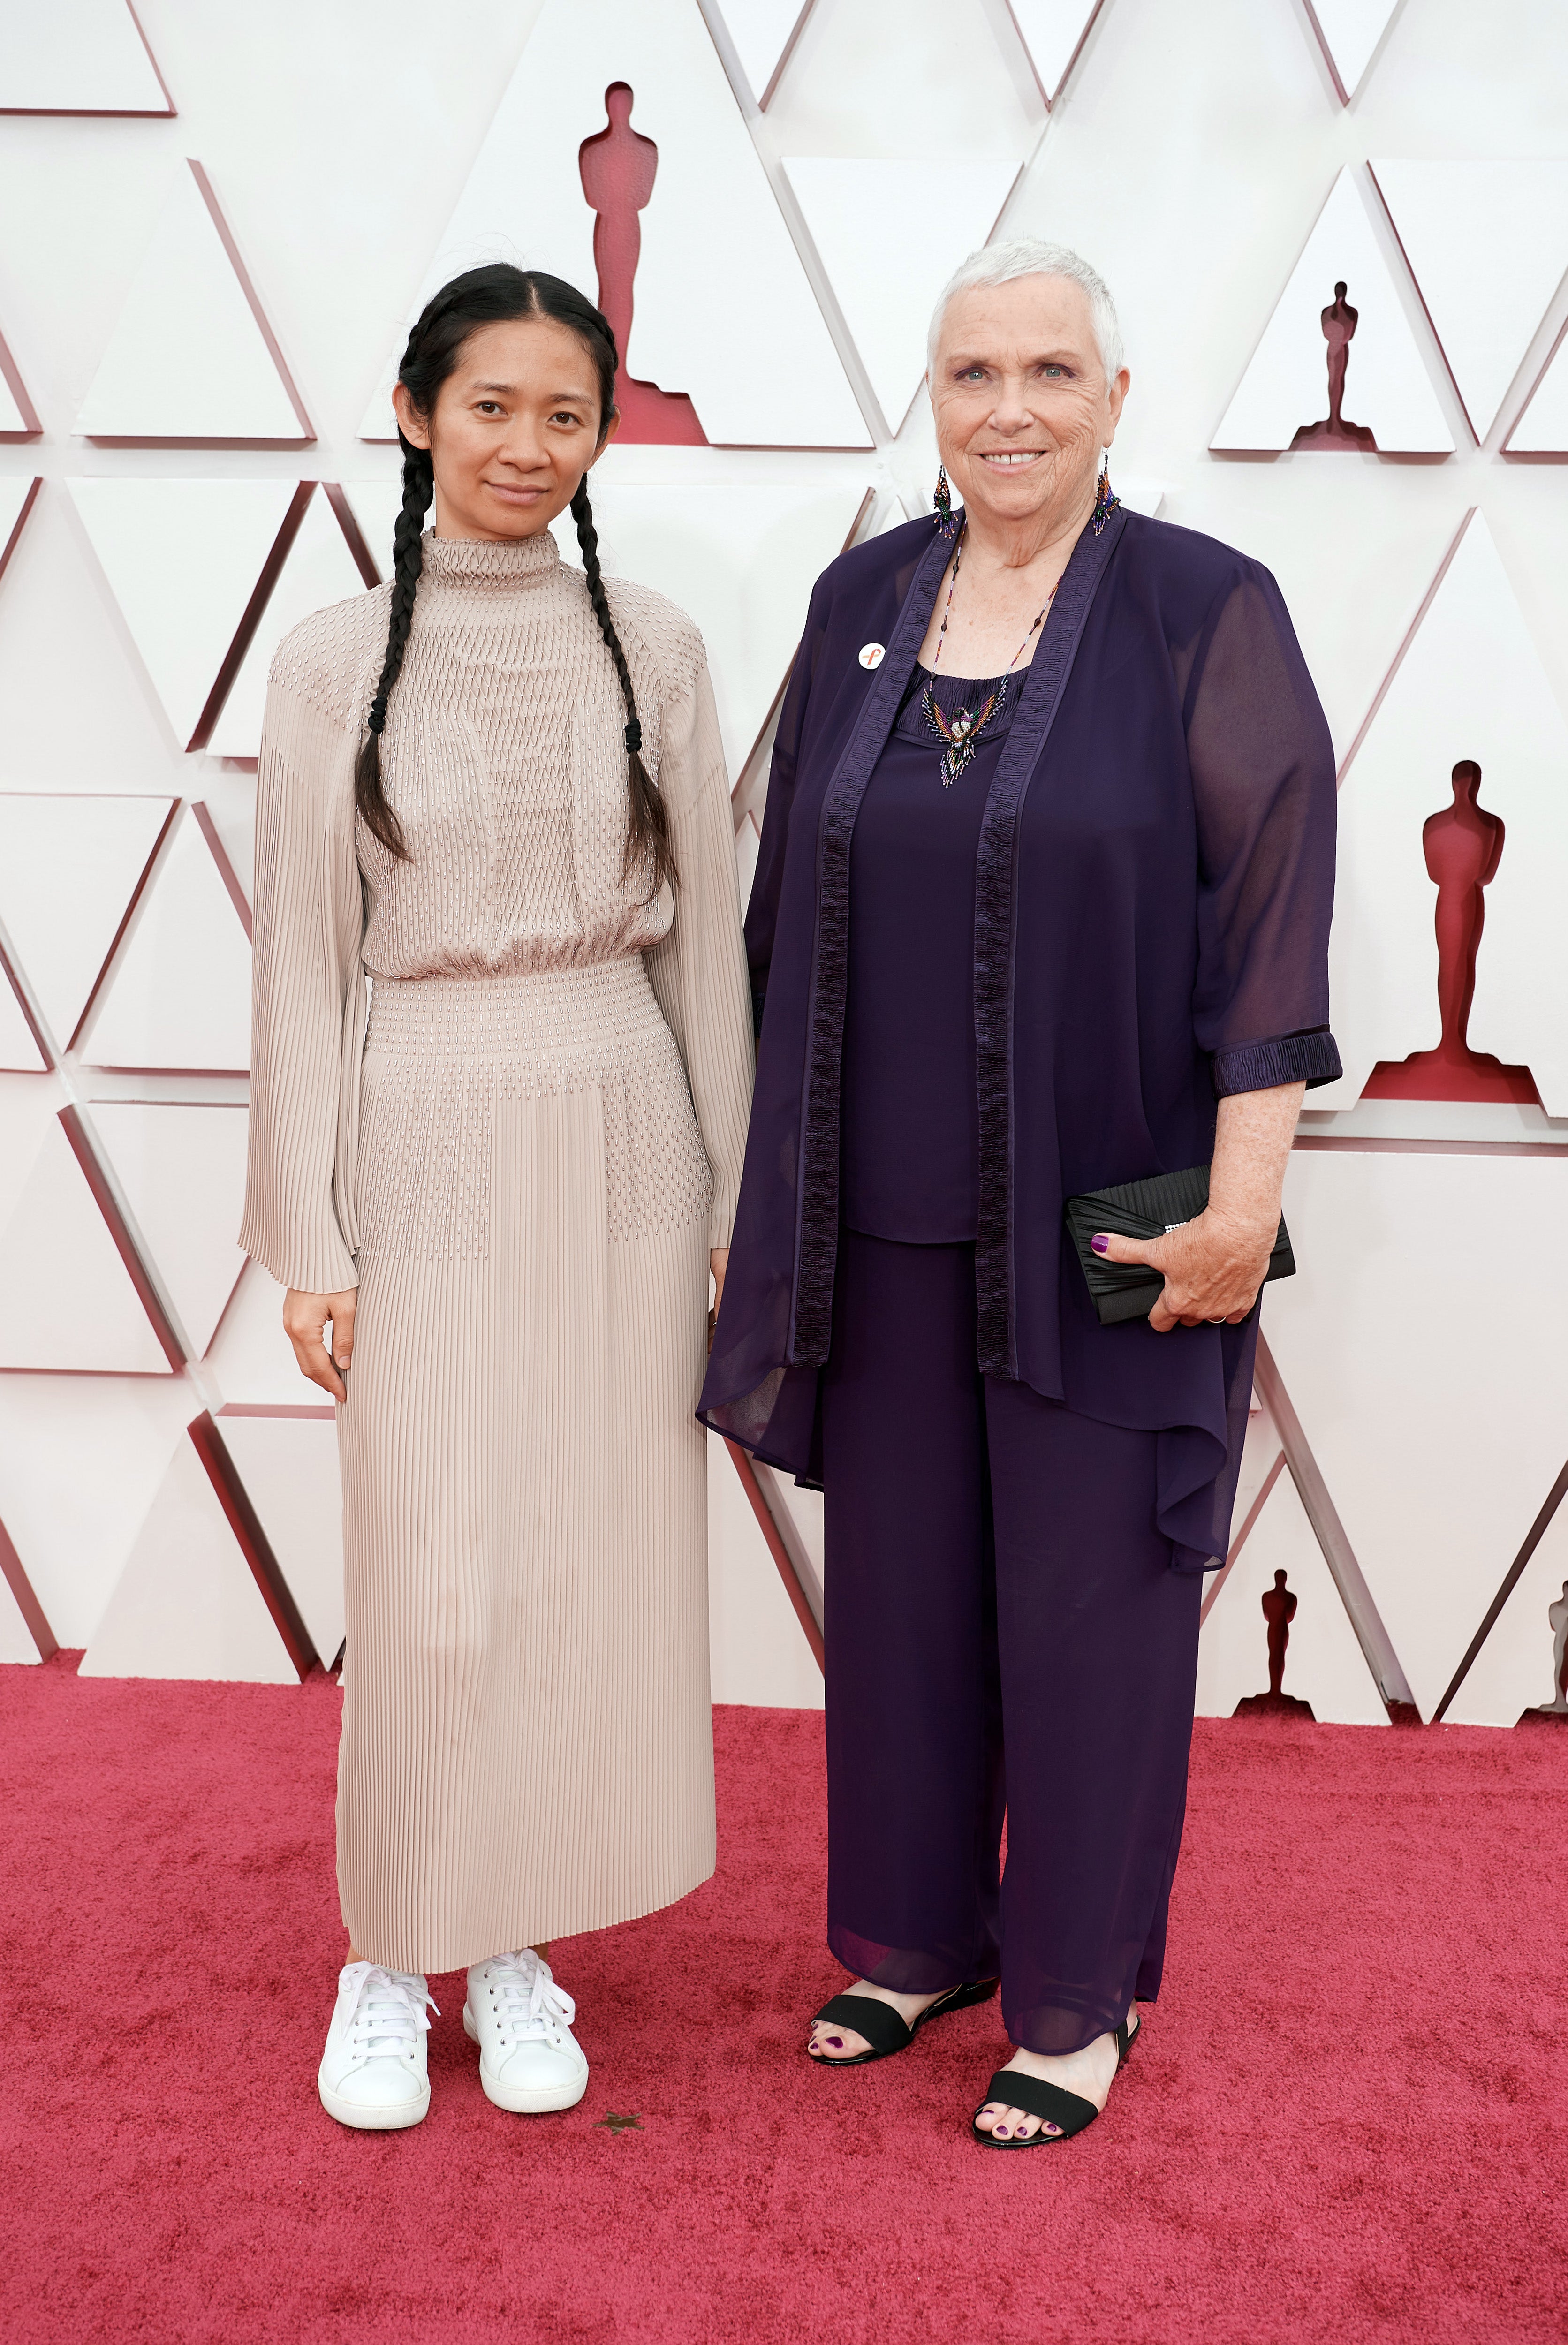 Chloé Zhao and Charlene Swankie attend the 2021 Academy Awards